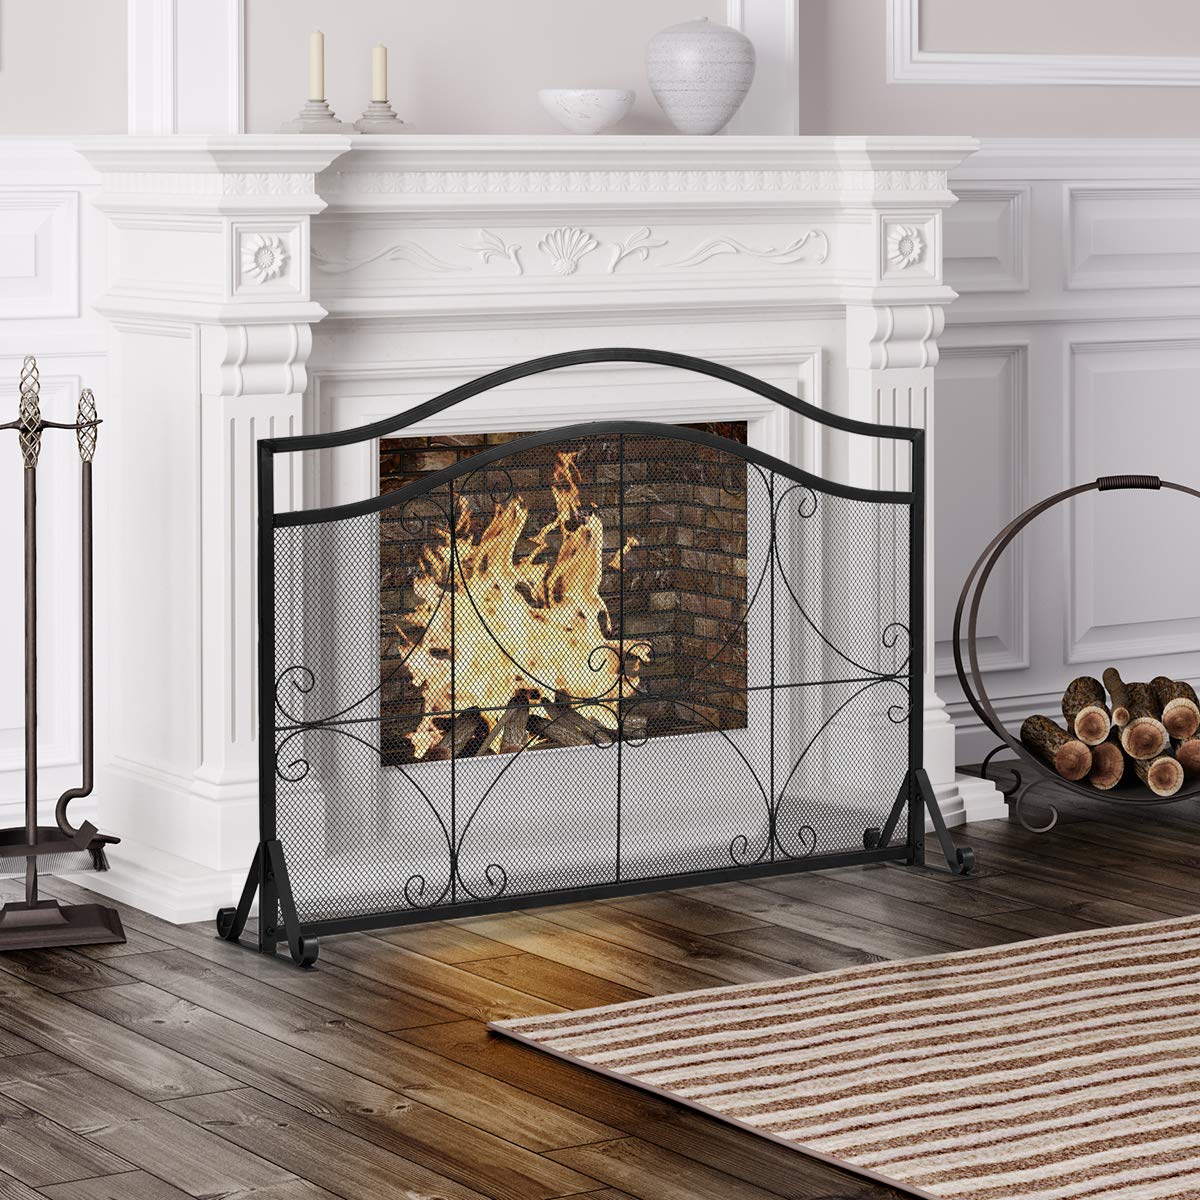 Giantex 112cm x 82cm Fireplace Screen